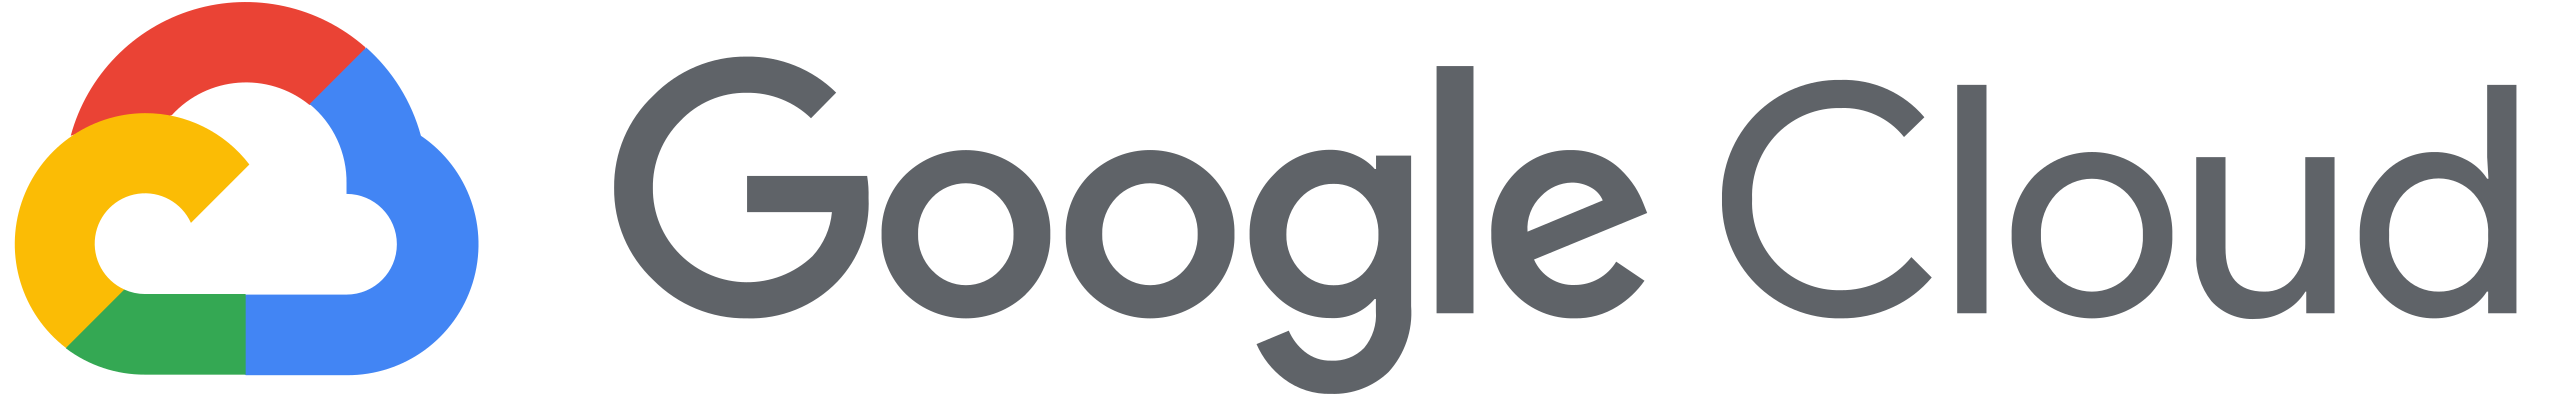 Google cloud logo.svg